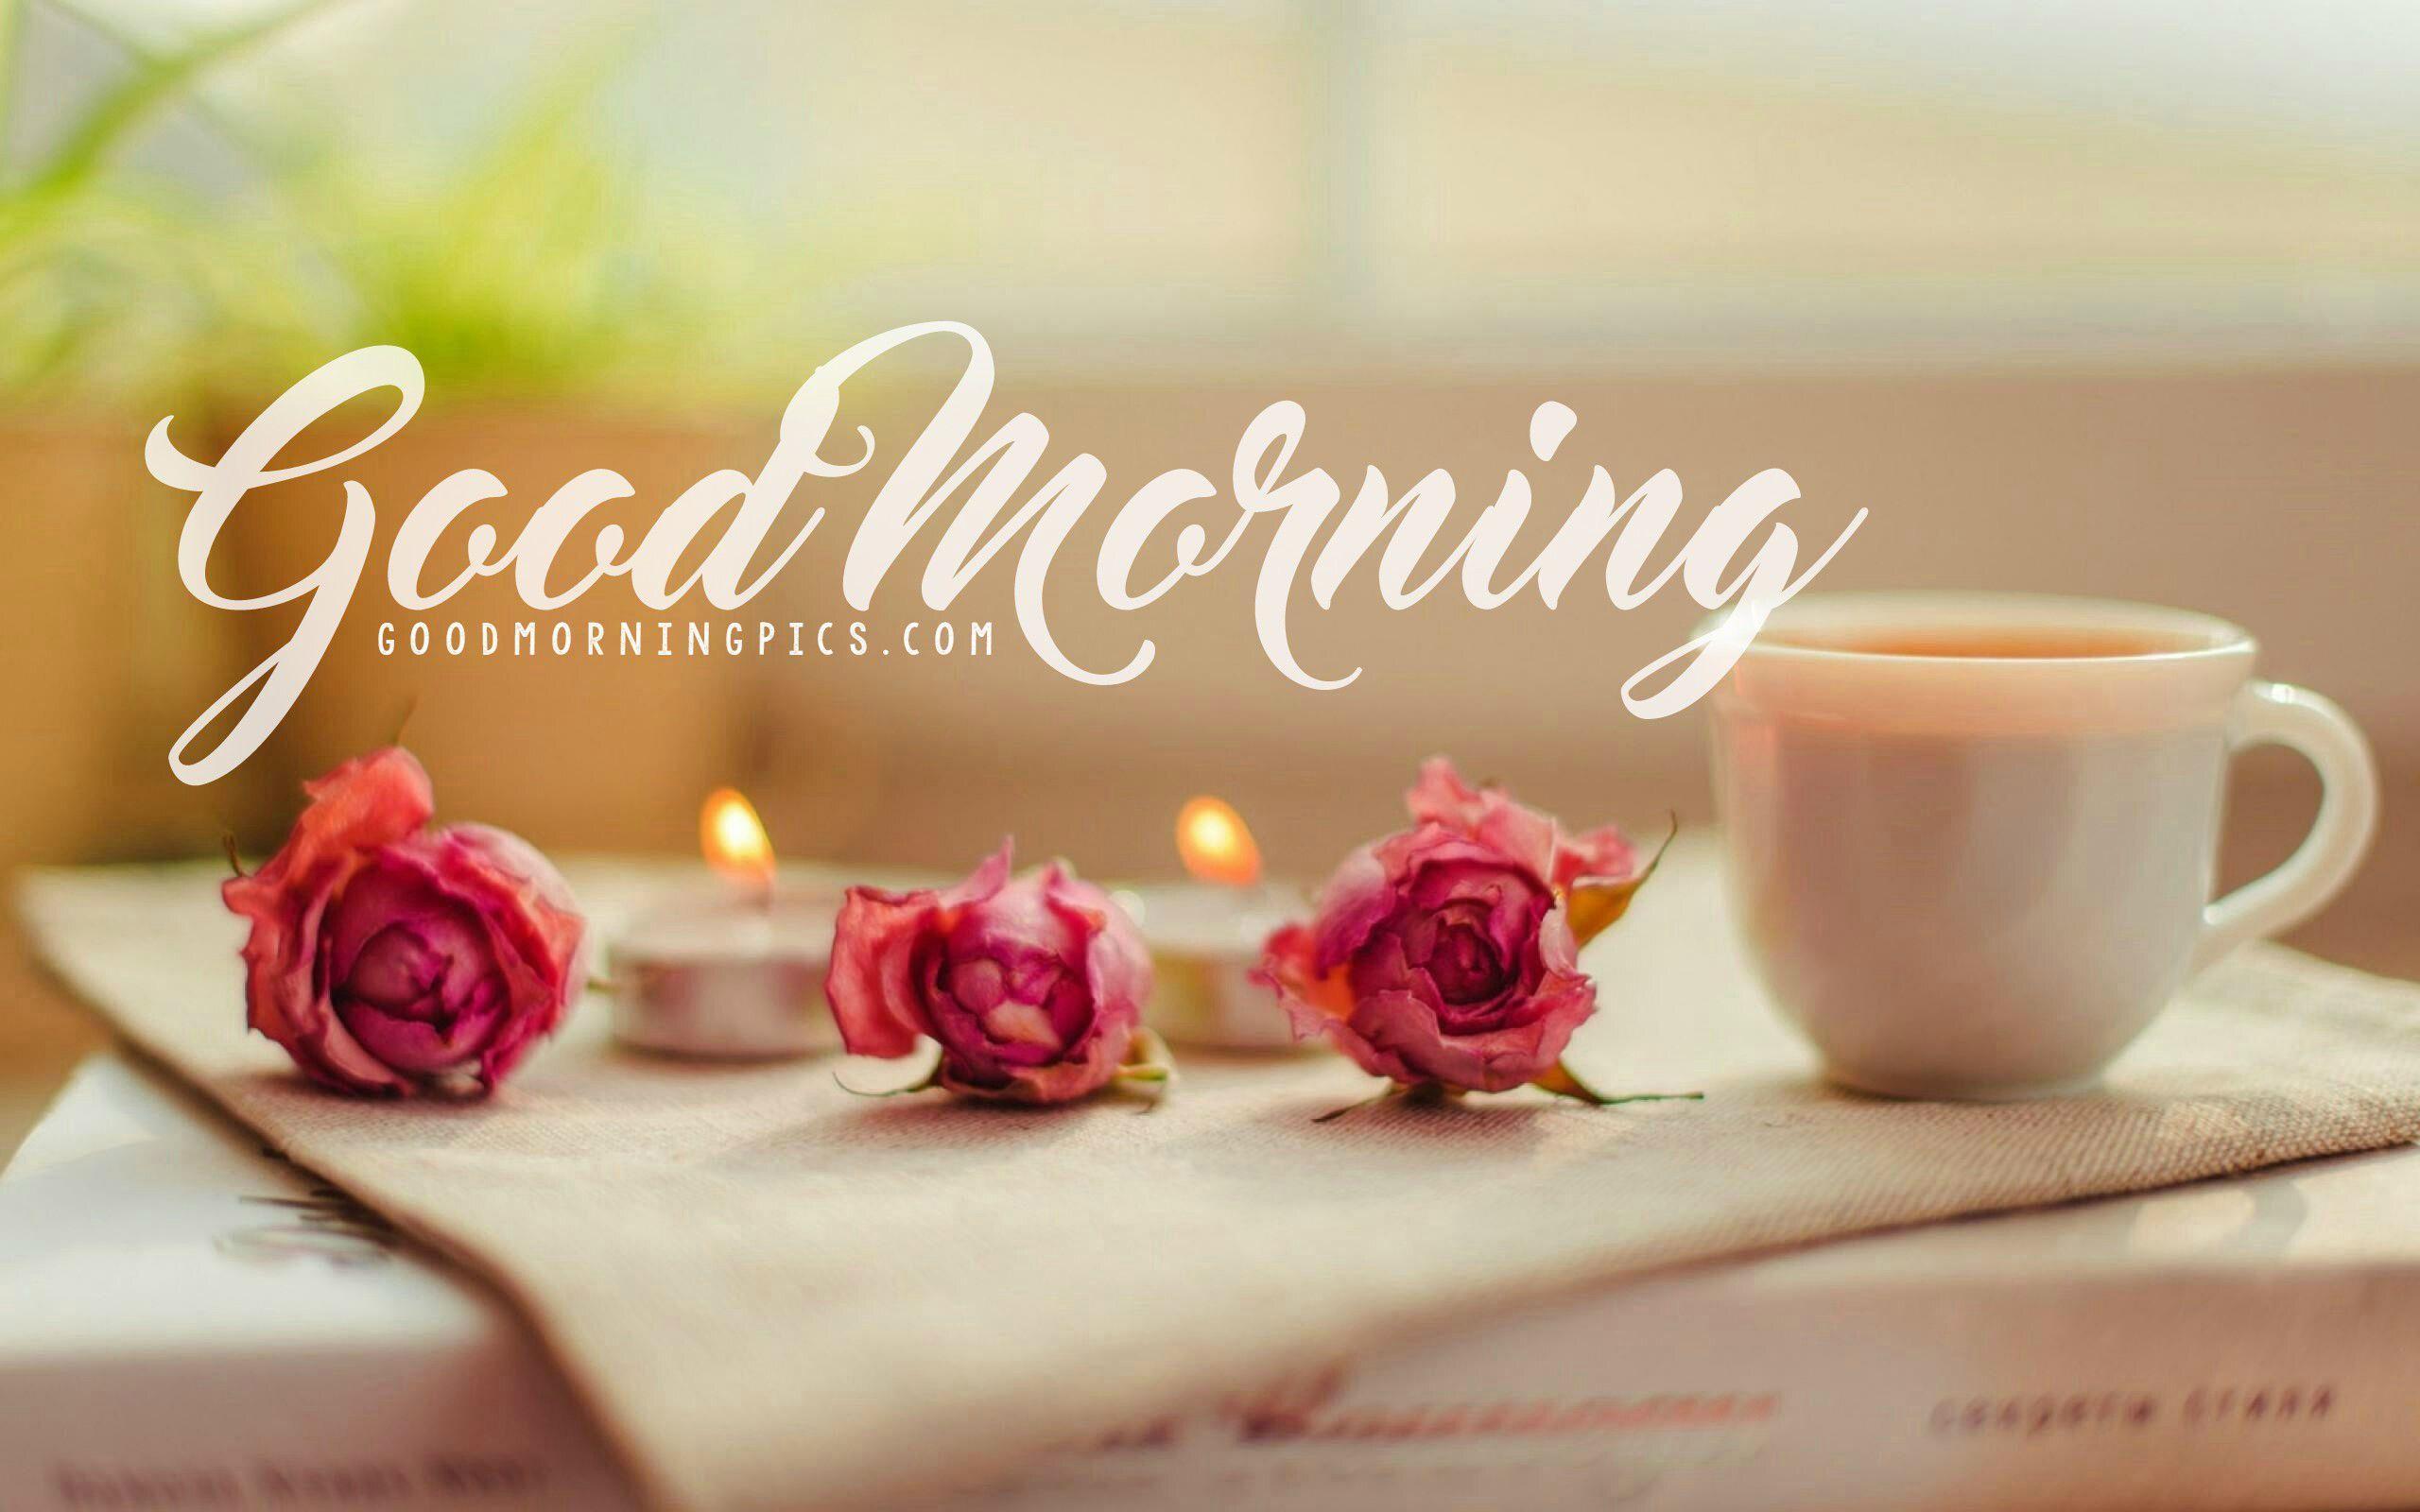 My beautiful morning. Утренние цветы. Кофе и цветы. Утренние цветы картинки. Кофе с цветами.